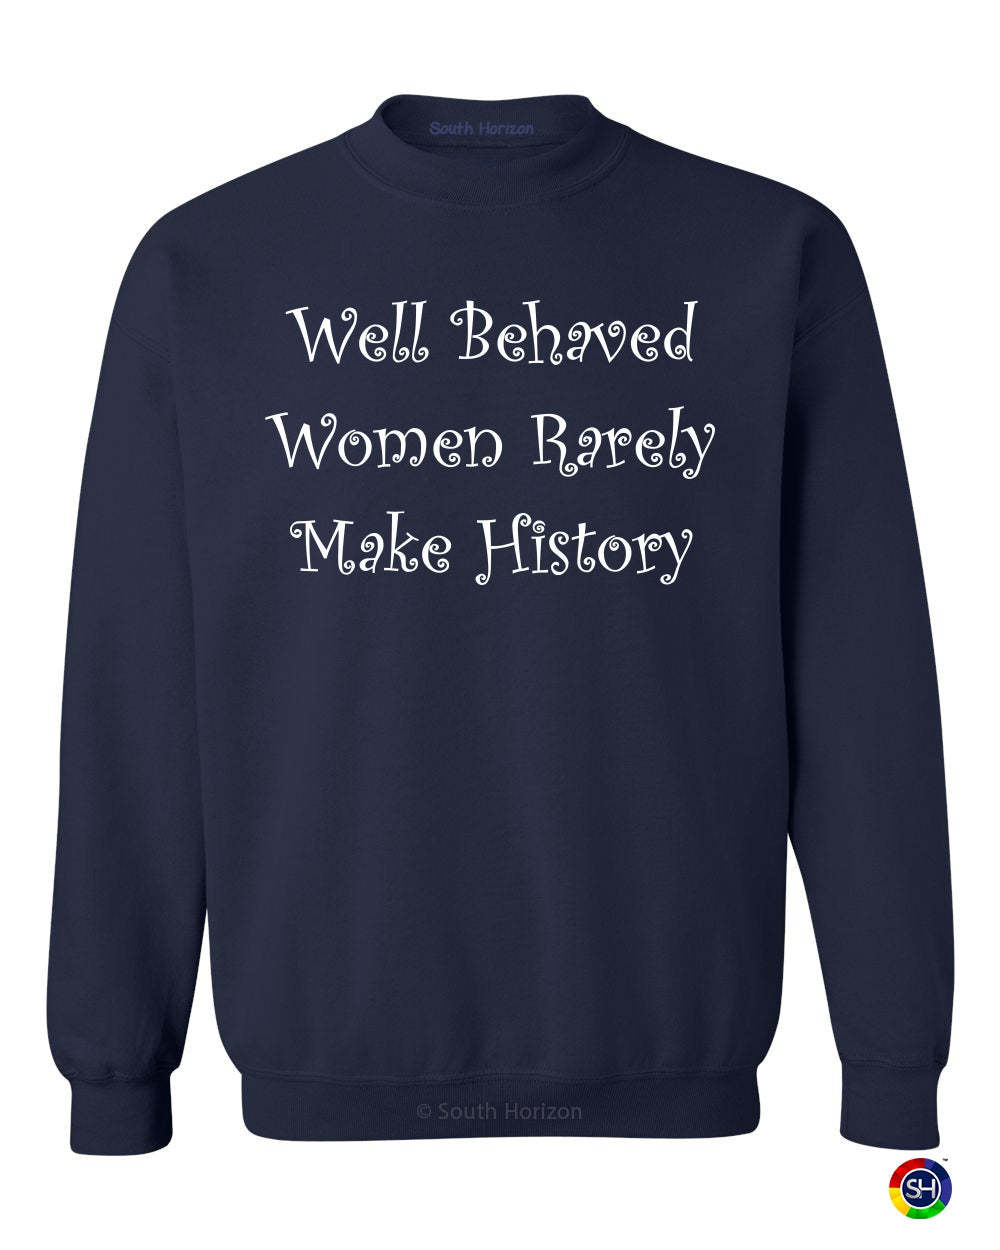 Well Behaved Women Rarely Make History on SweatShirt (#487-11)